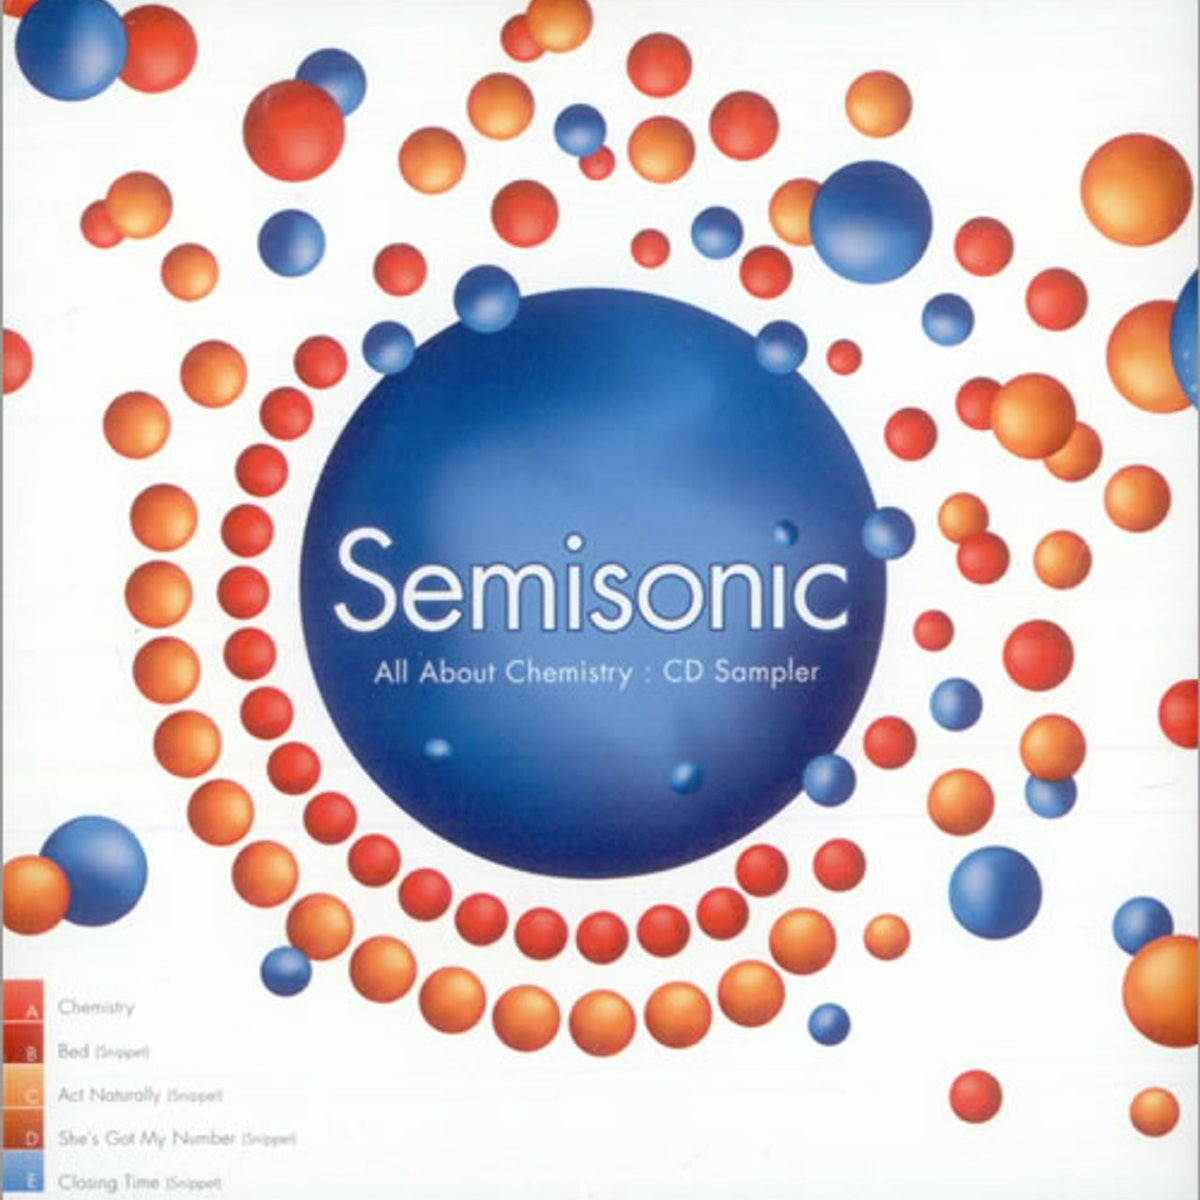 Semisonic All About Chemistry: CD Sampler UK Promo CD album — RareVinyl.com